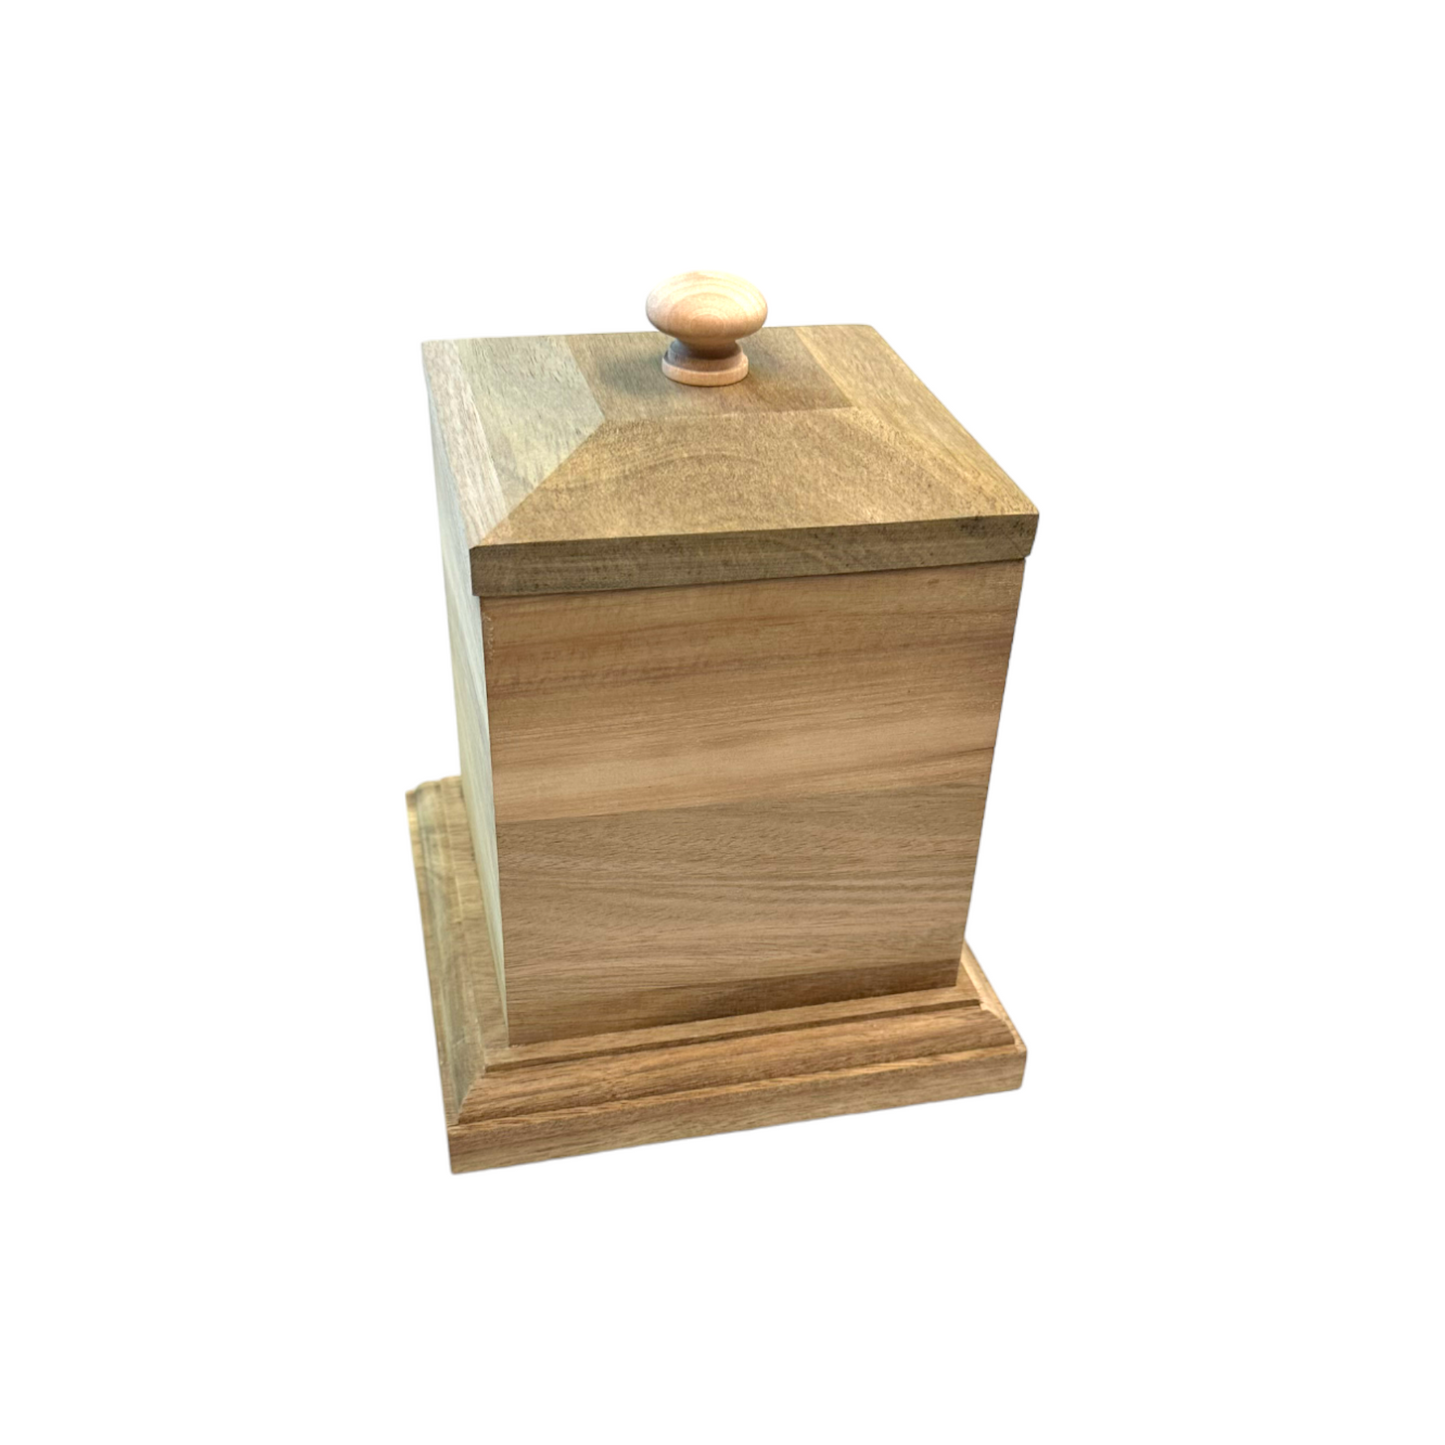 Square Wooden Urn